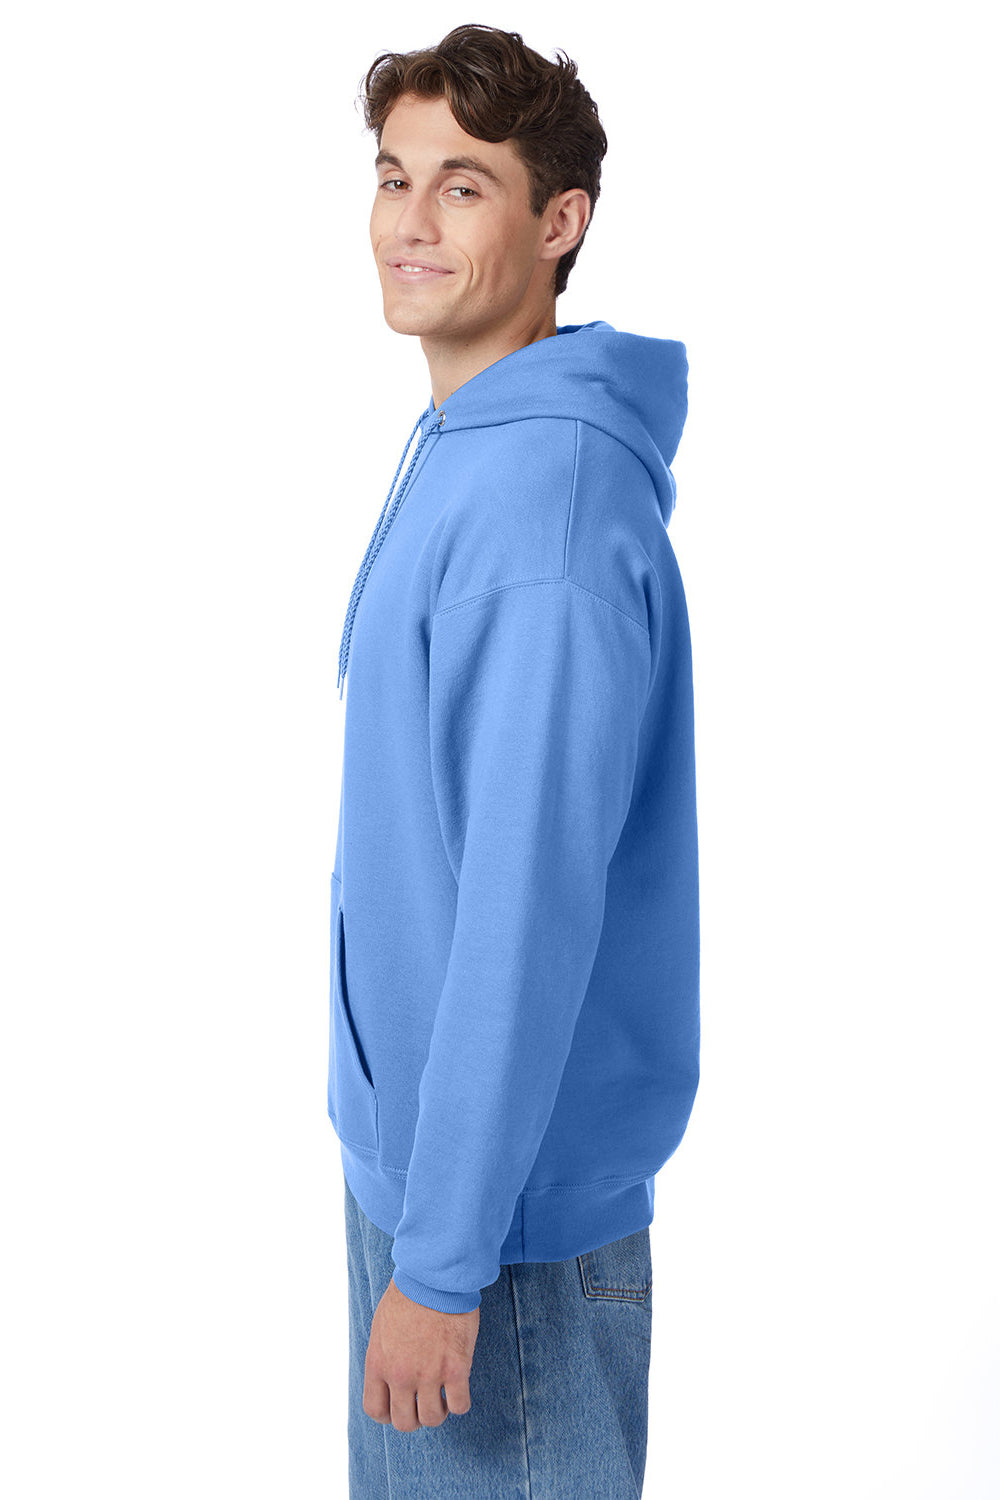 Hanes P170 Mens EcoSmart Print Pro XP Hooded Sweatshirt Hoodie Carolina Blue SIde